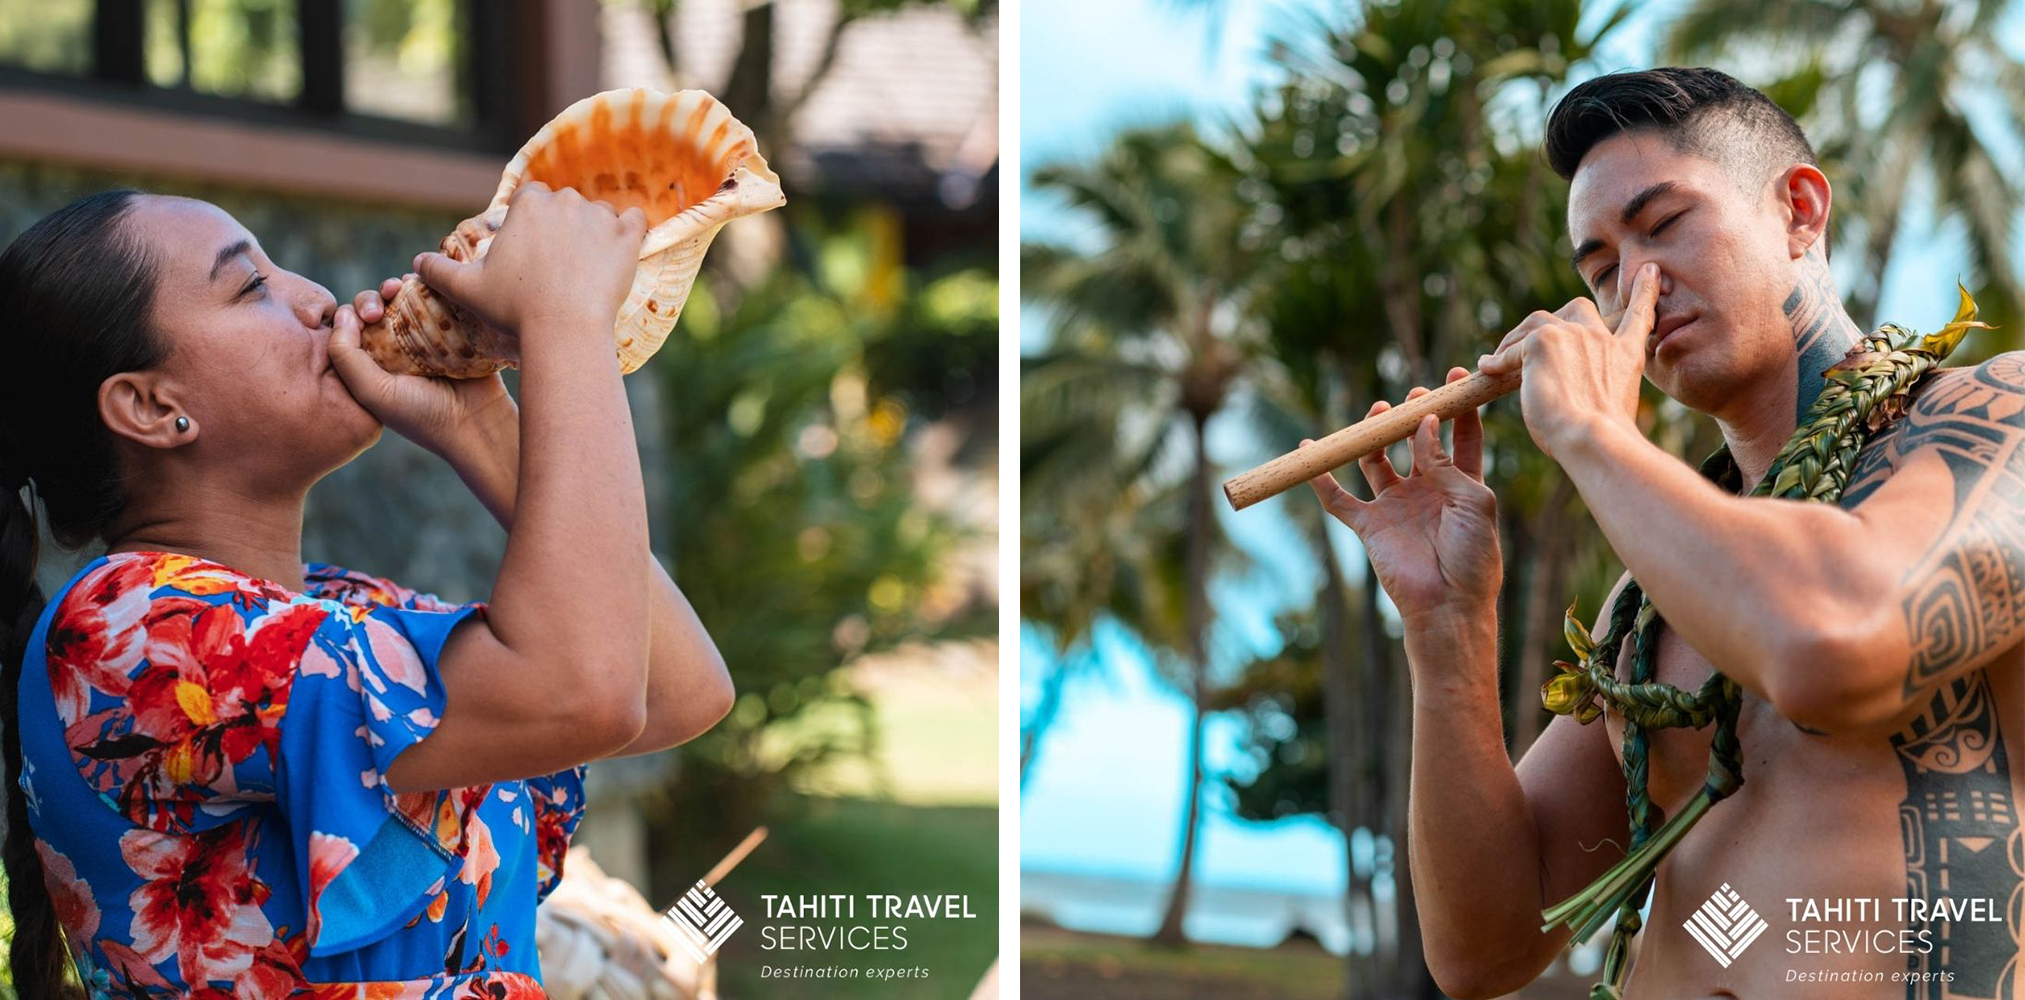 © Tahiti Travel Services